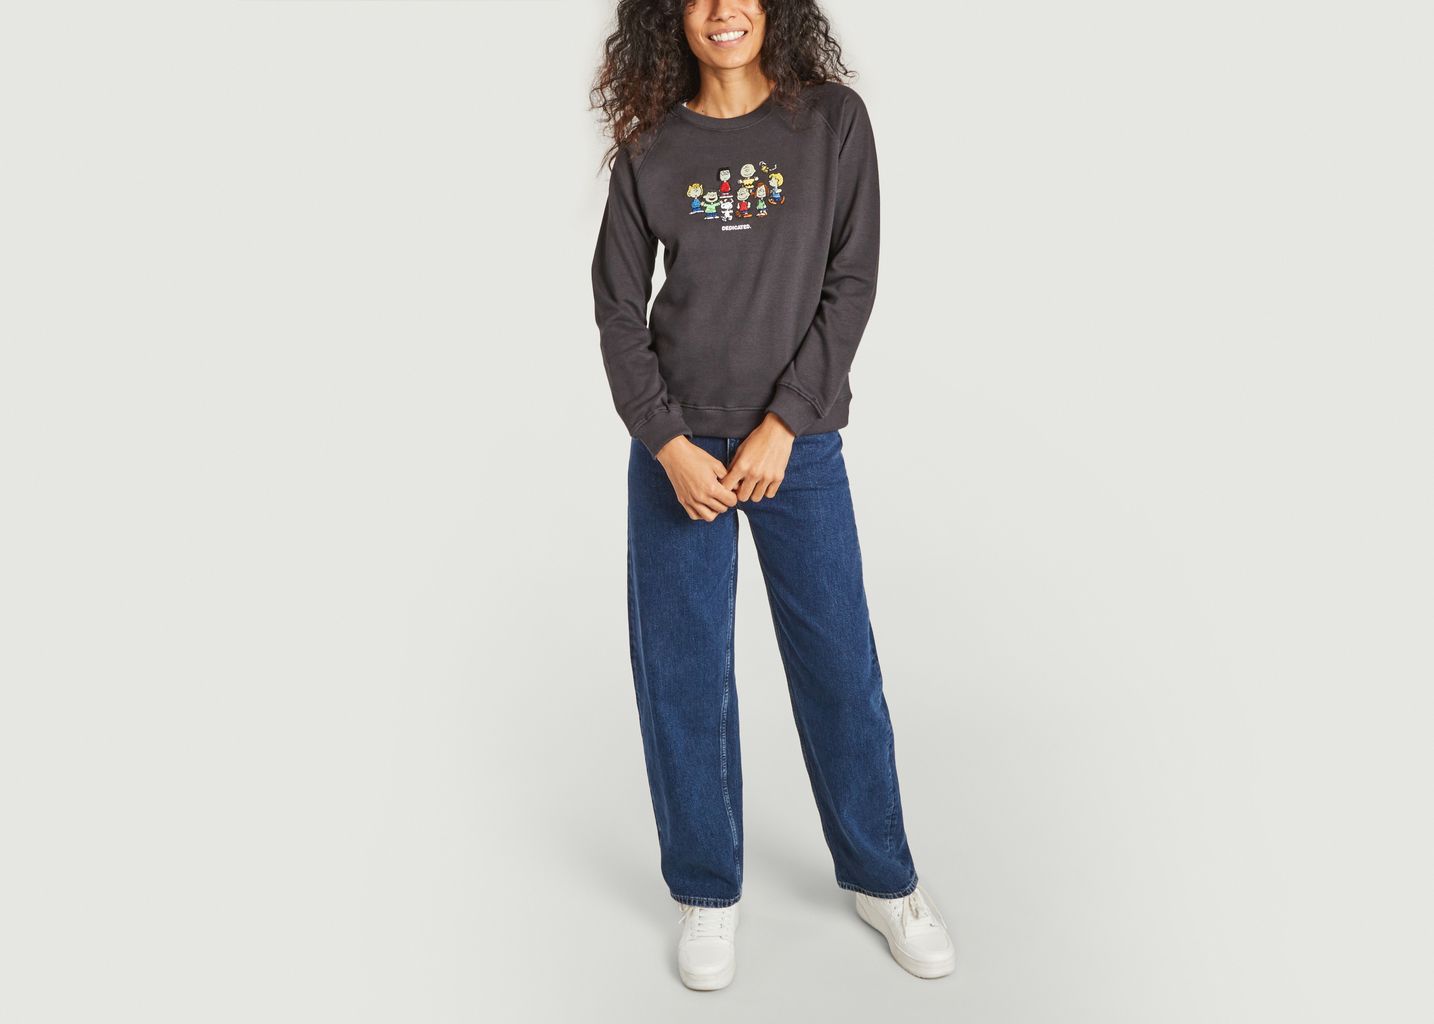 Sweatshirt Ystad Peanuts Friends Dedicated Brand x Snoopy - Dedicated Brand